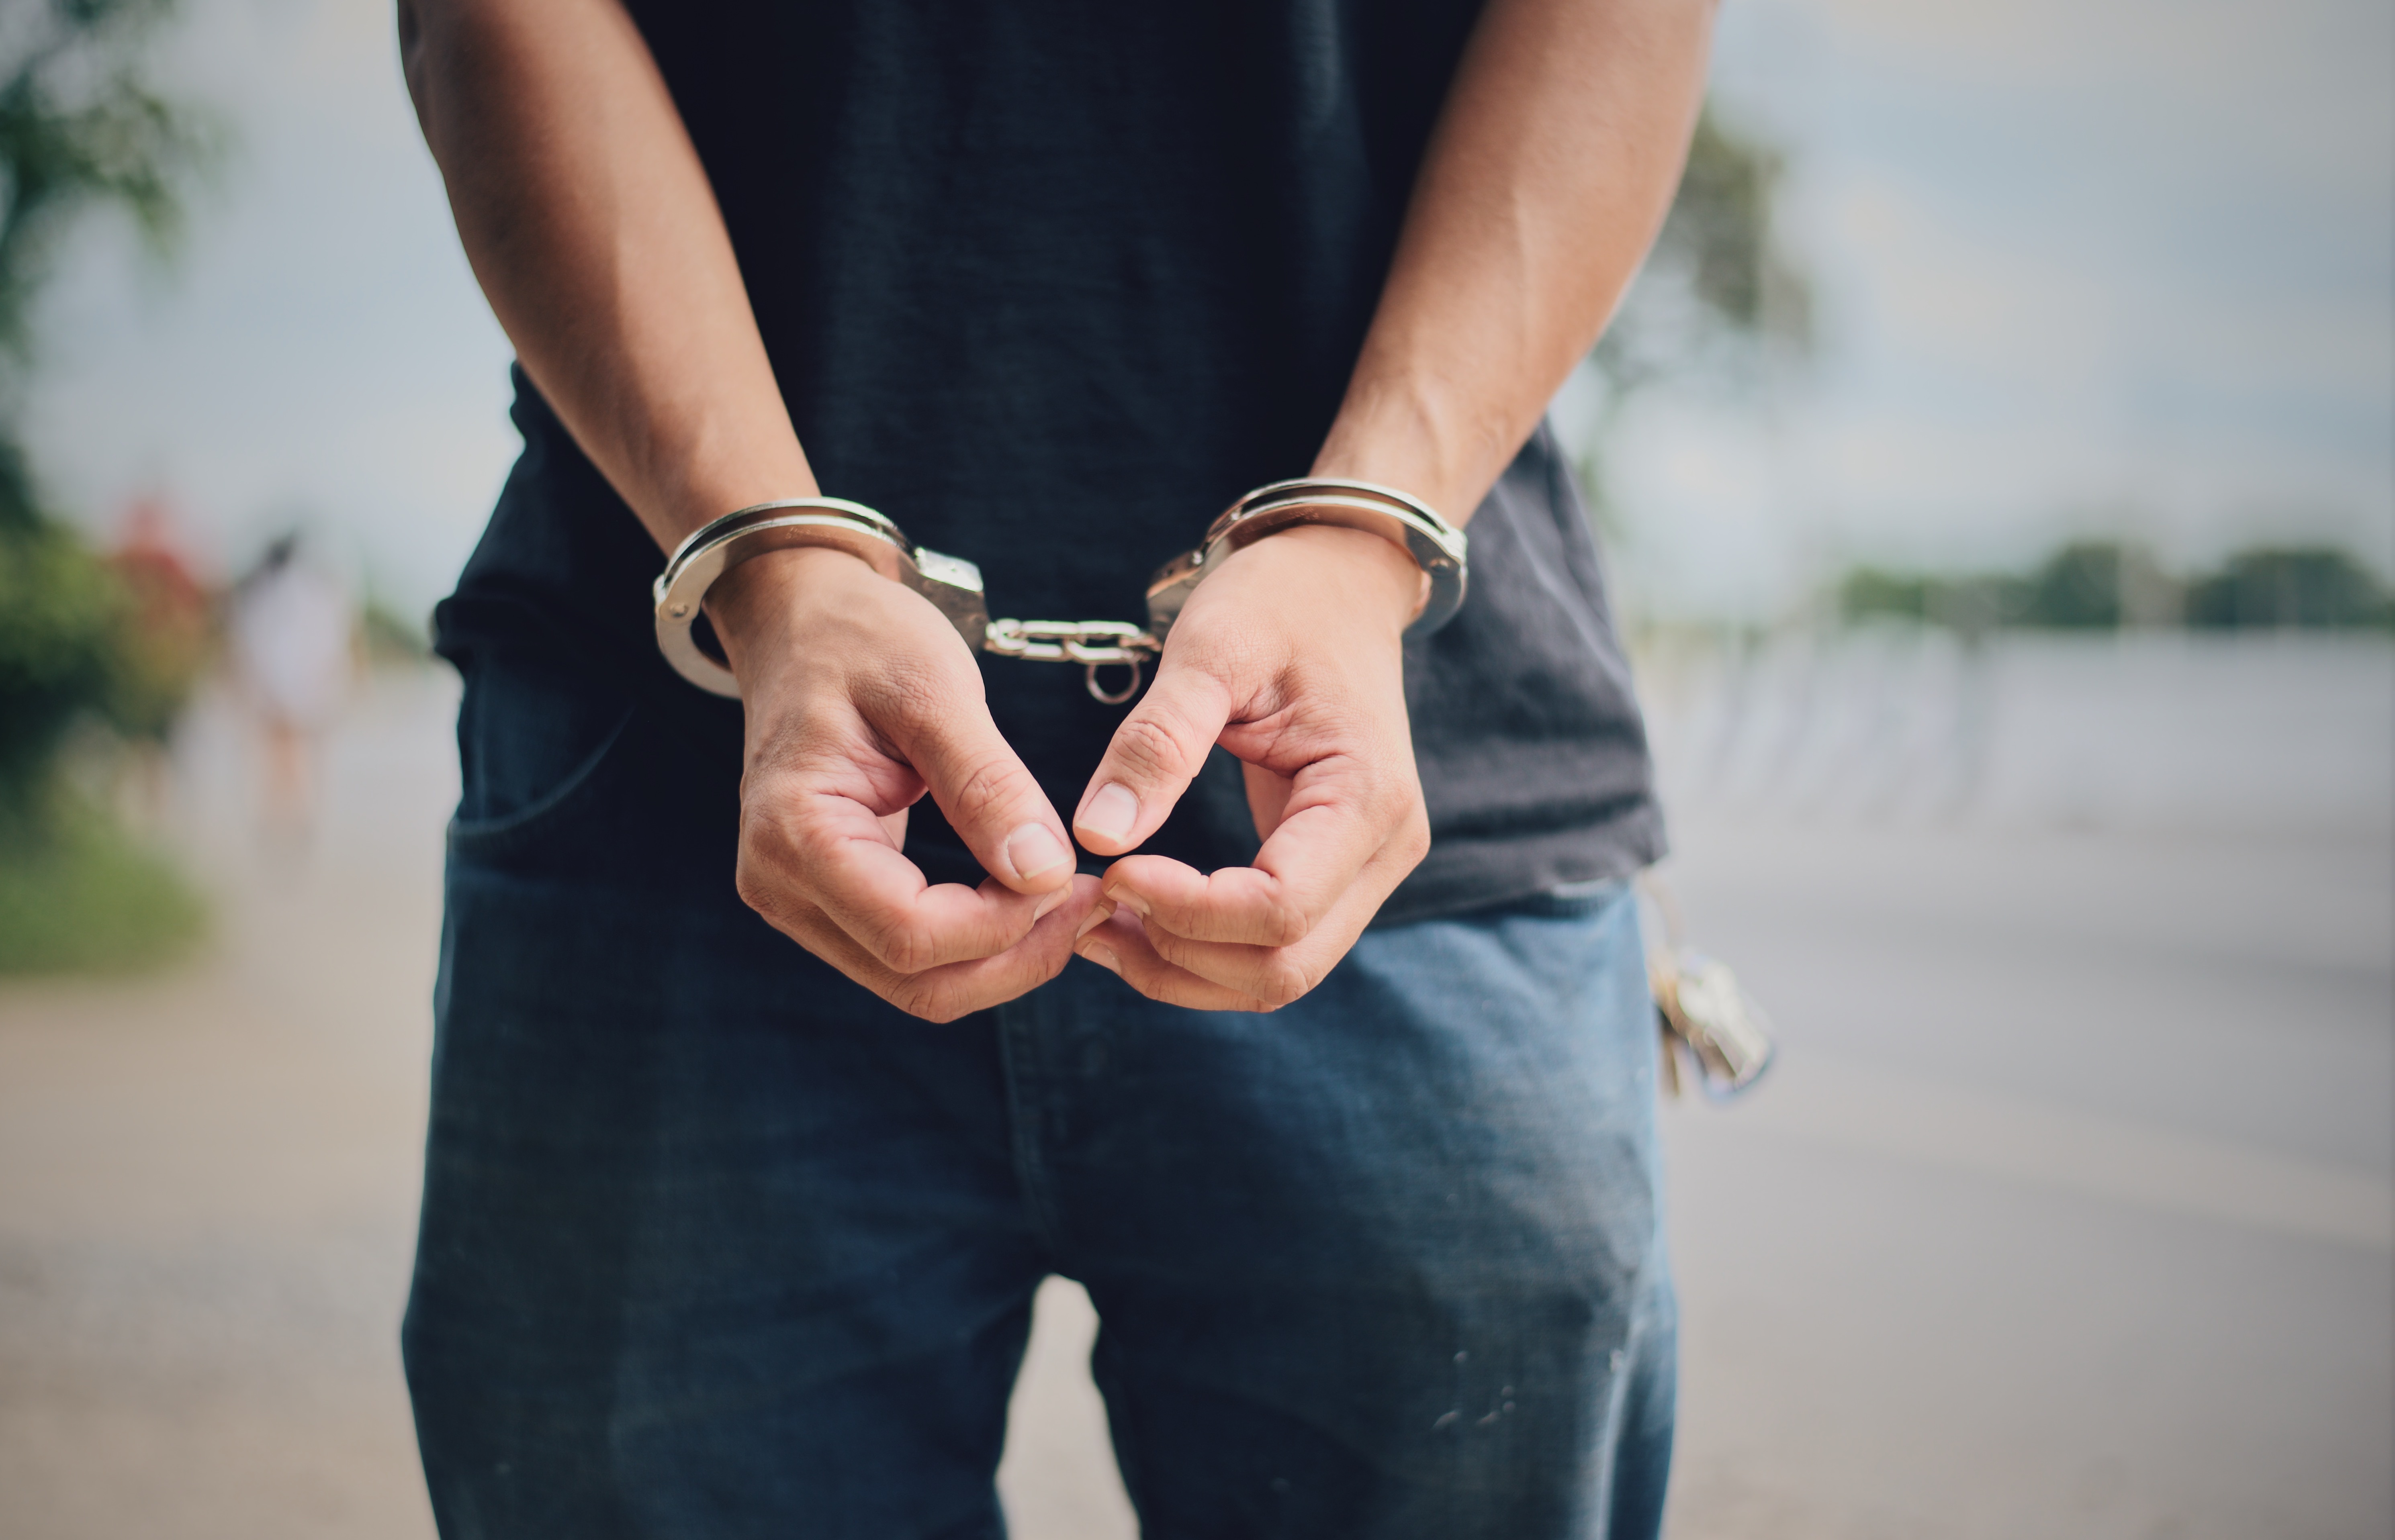 Арестуваха тинейджъри, продавали дрога в училища